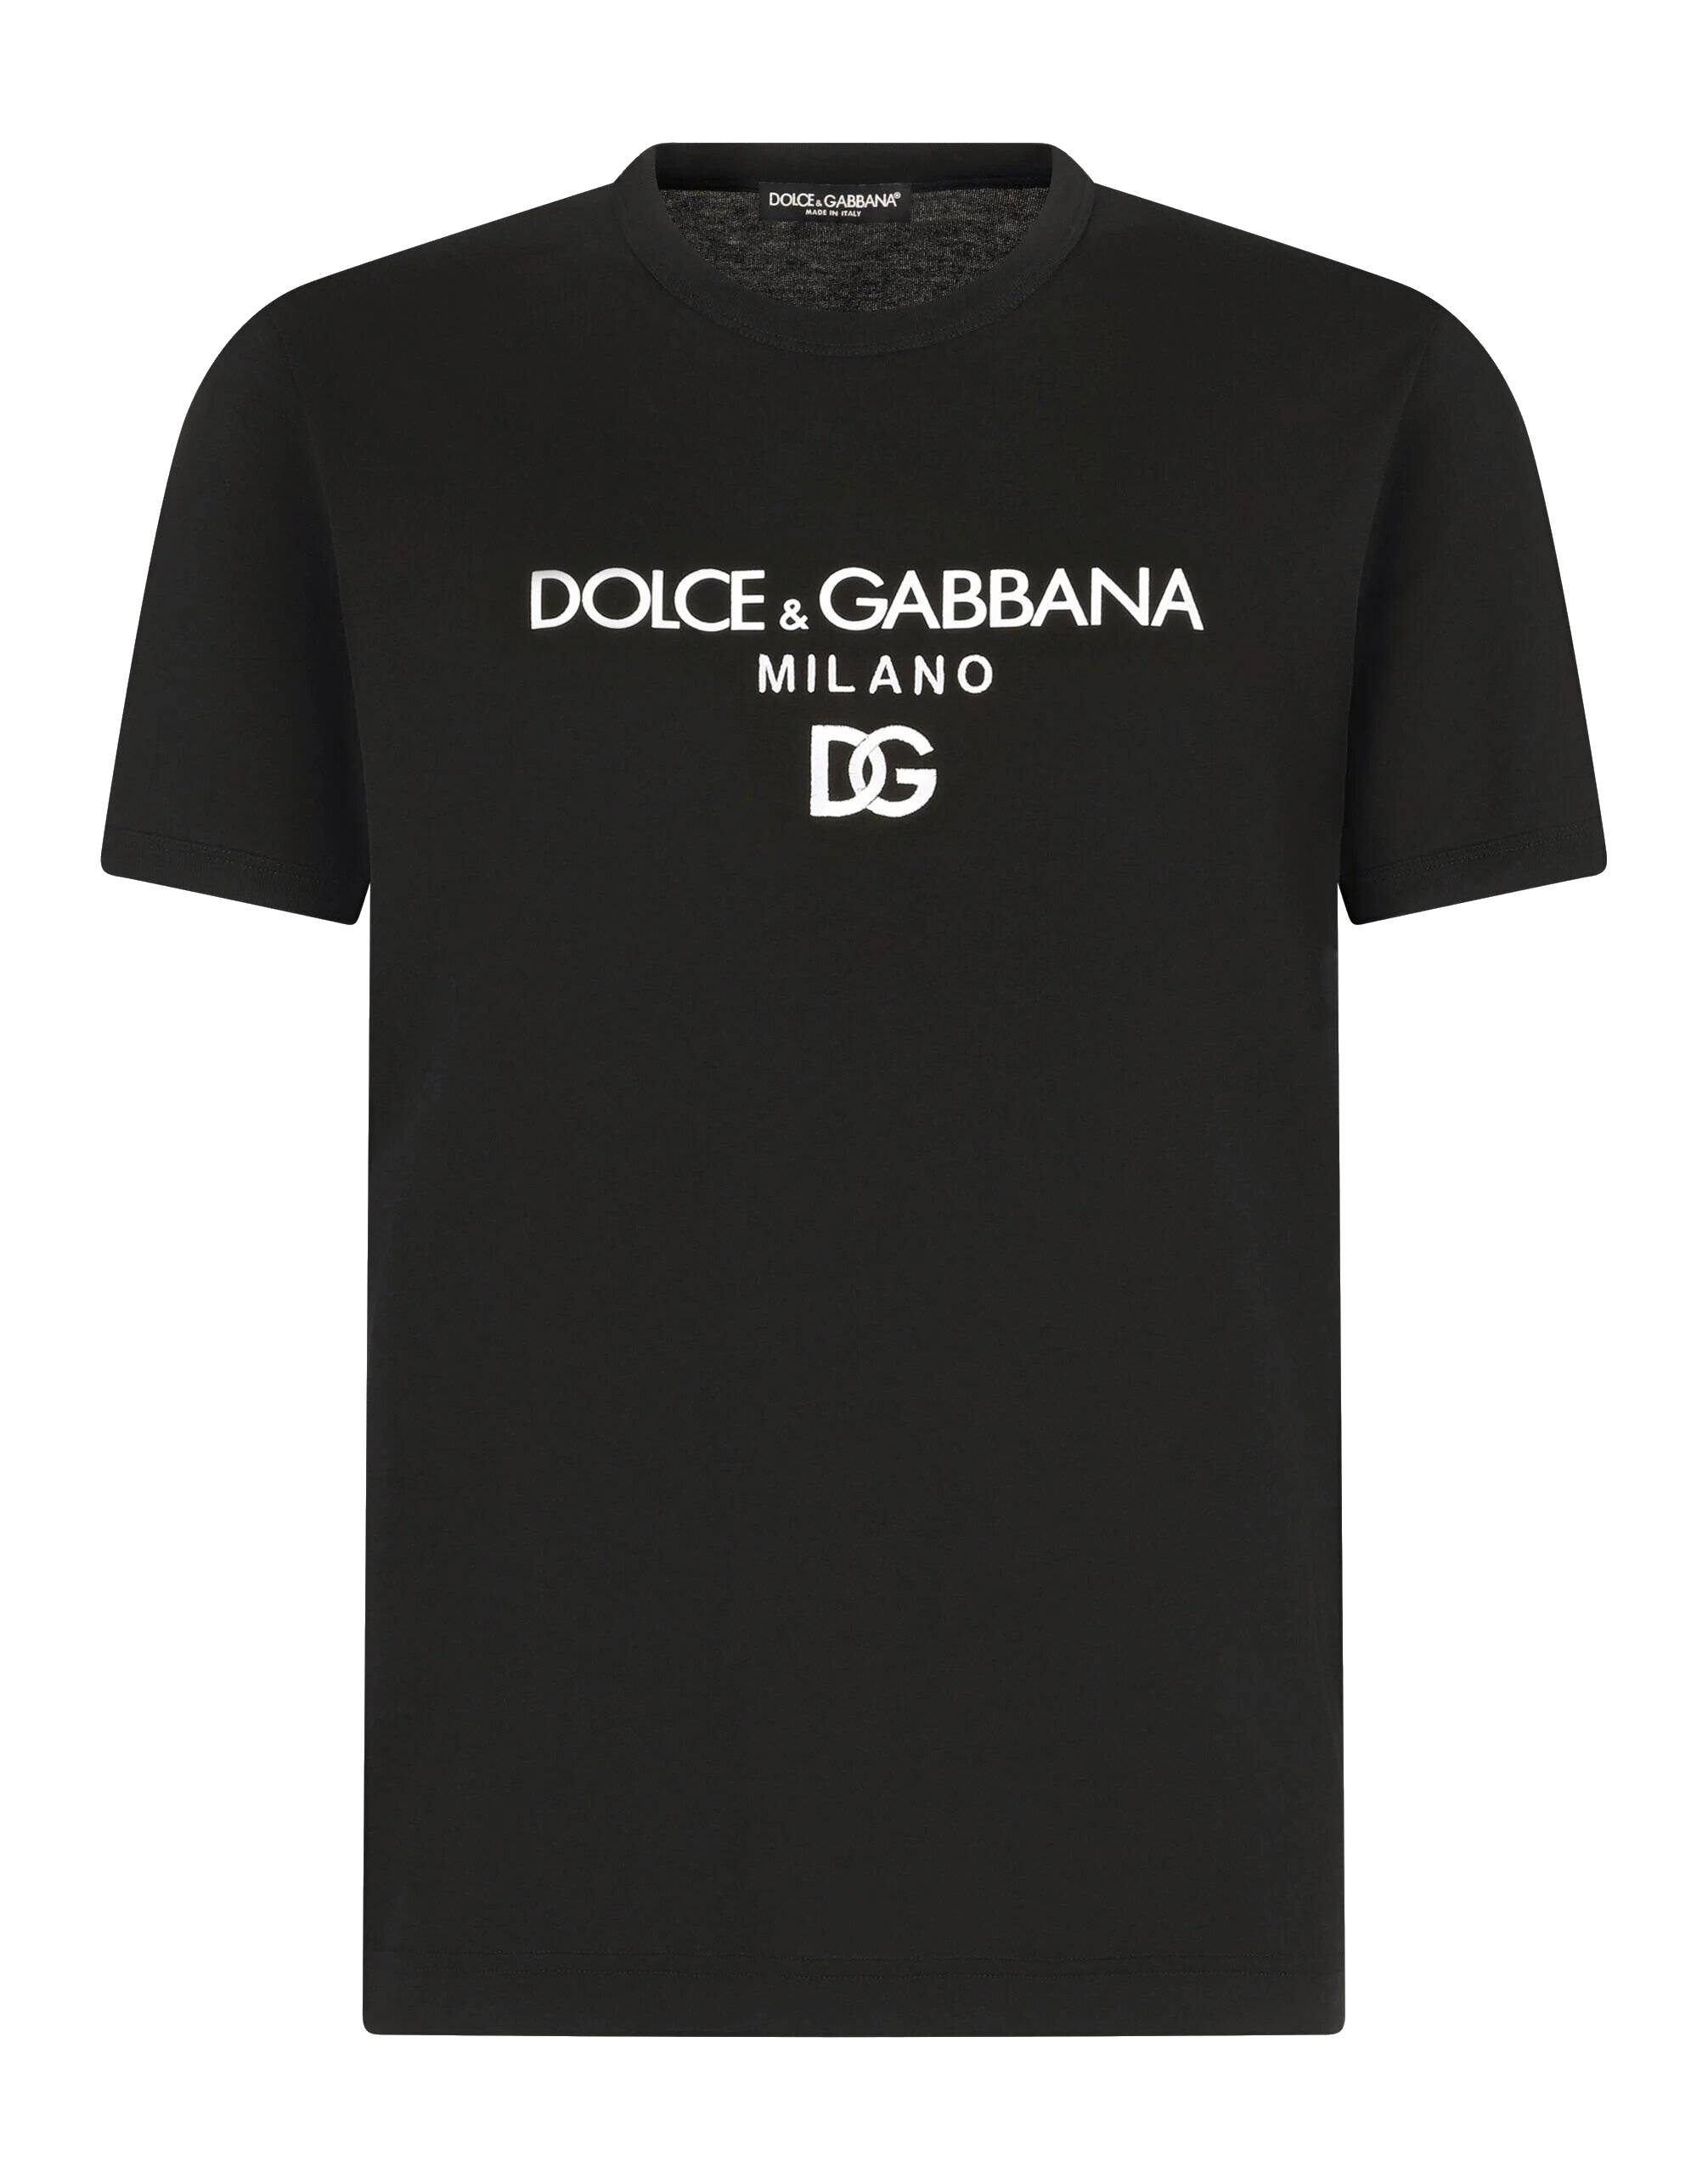 DOLCE & GABBANA camiseta de hombre negro logo estampado